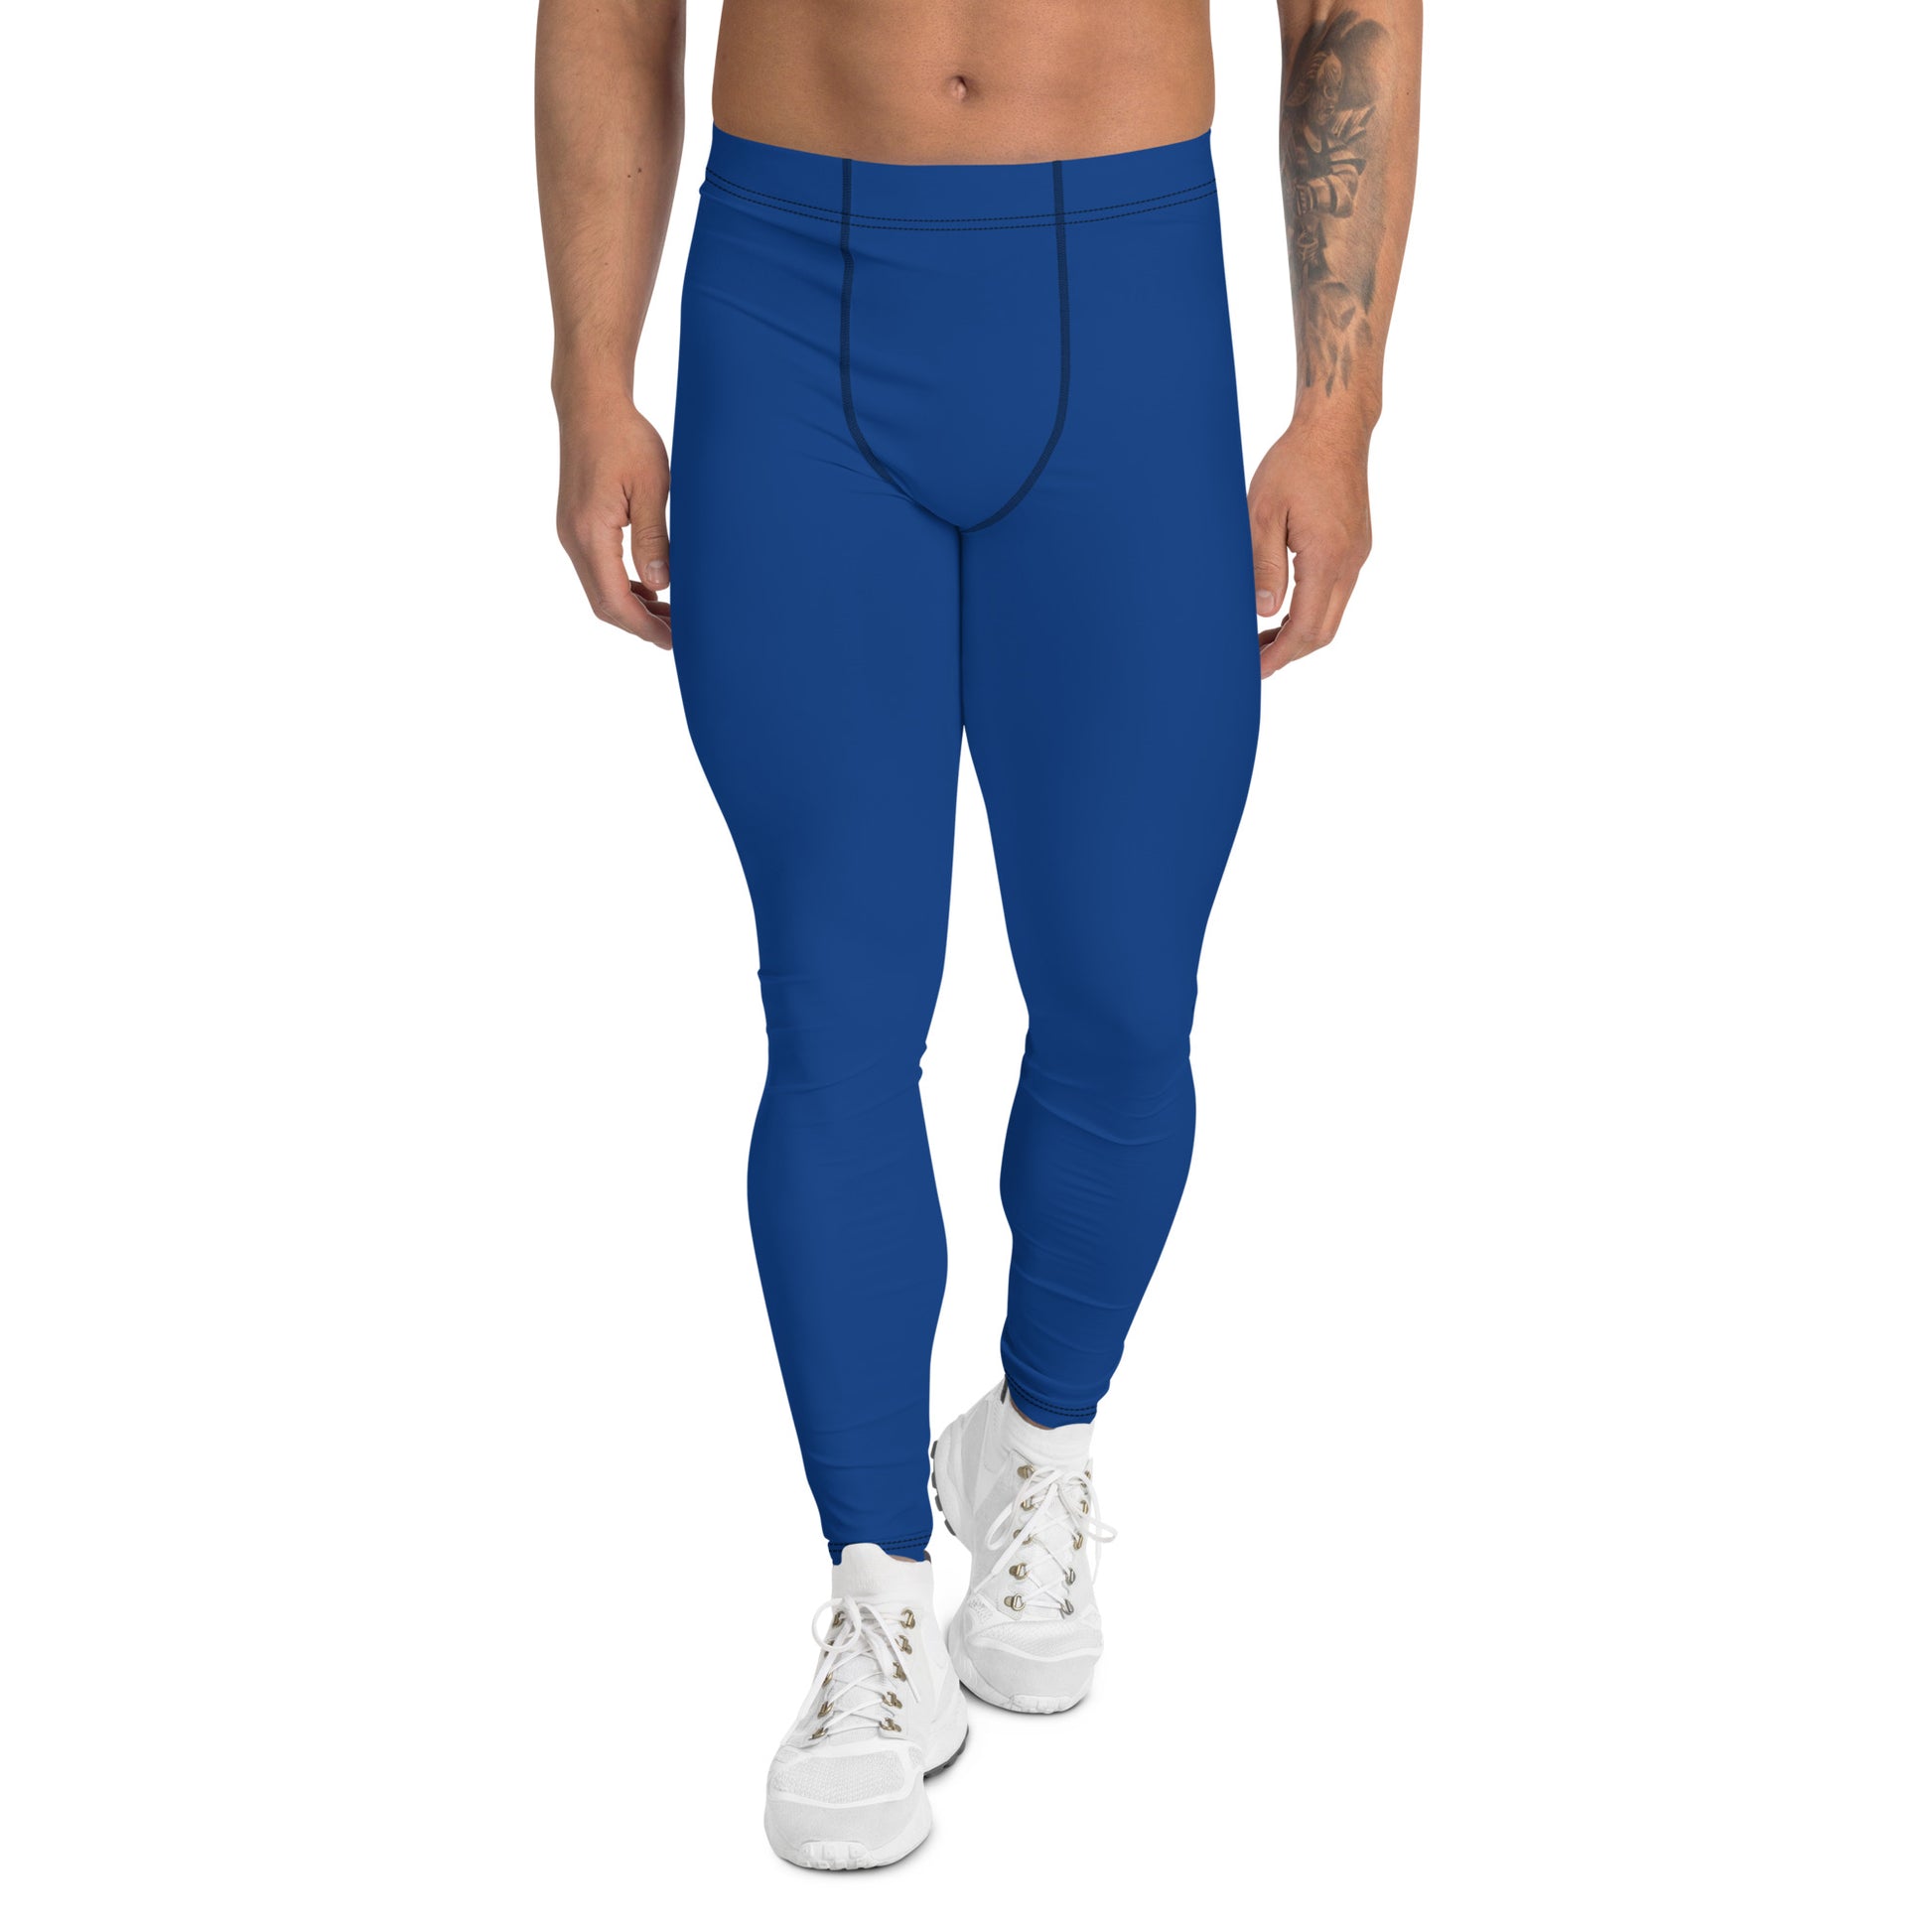 Humble Sportswear, men's leggings, active performance leggings, compression leggings for men, Color Match leggings